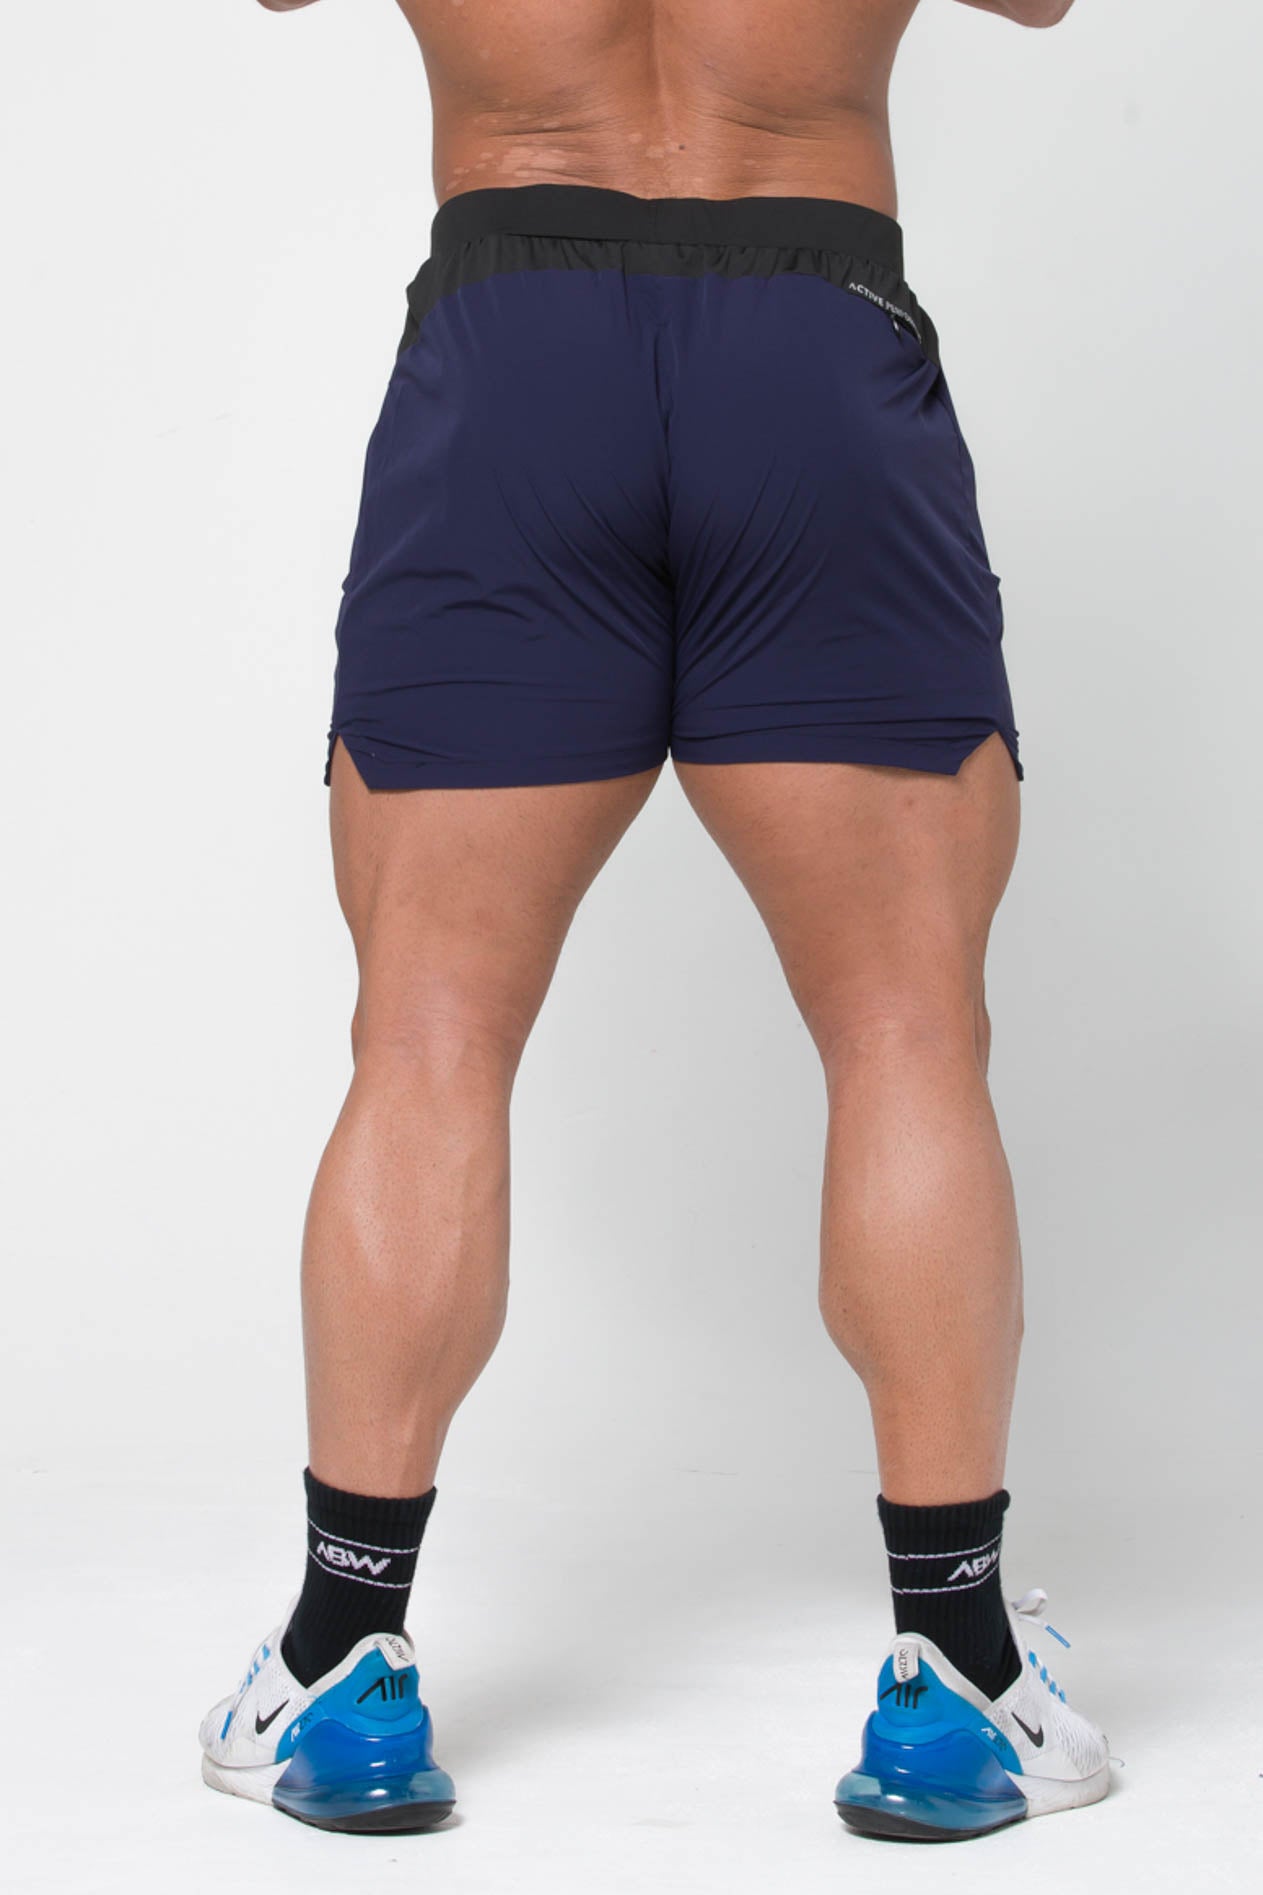 mens training shorts